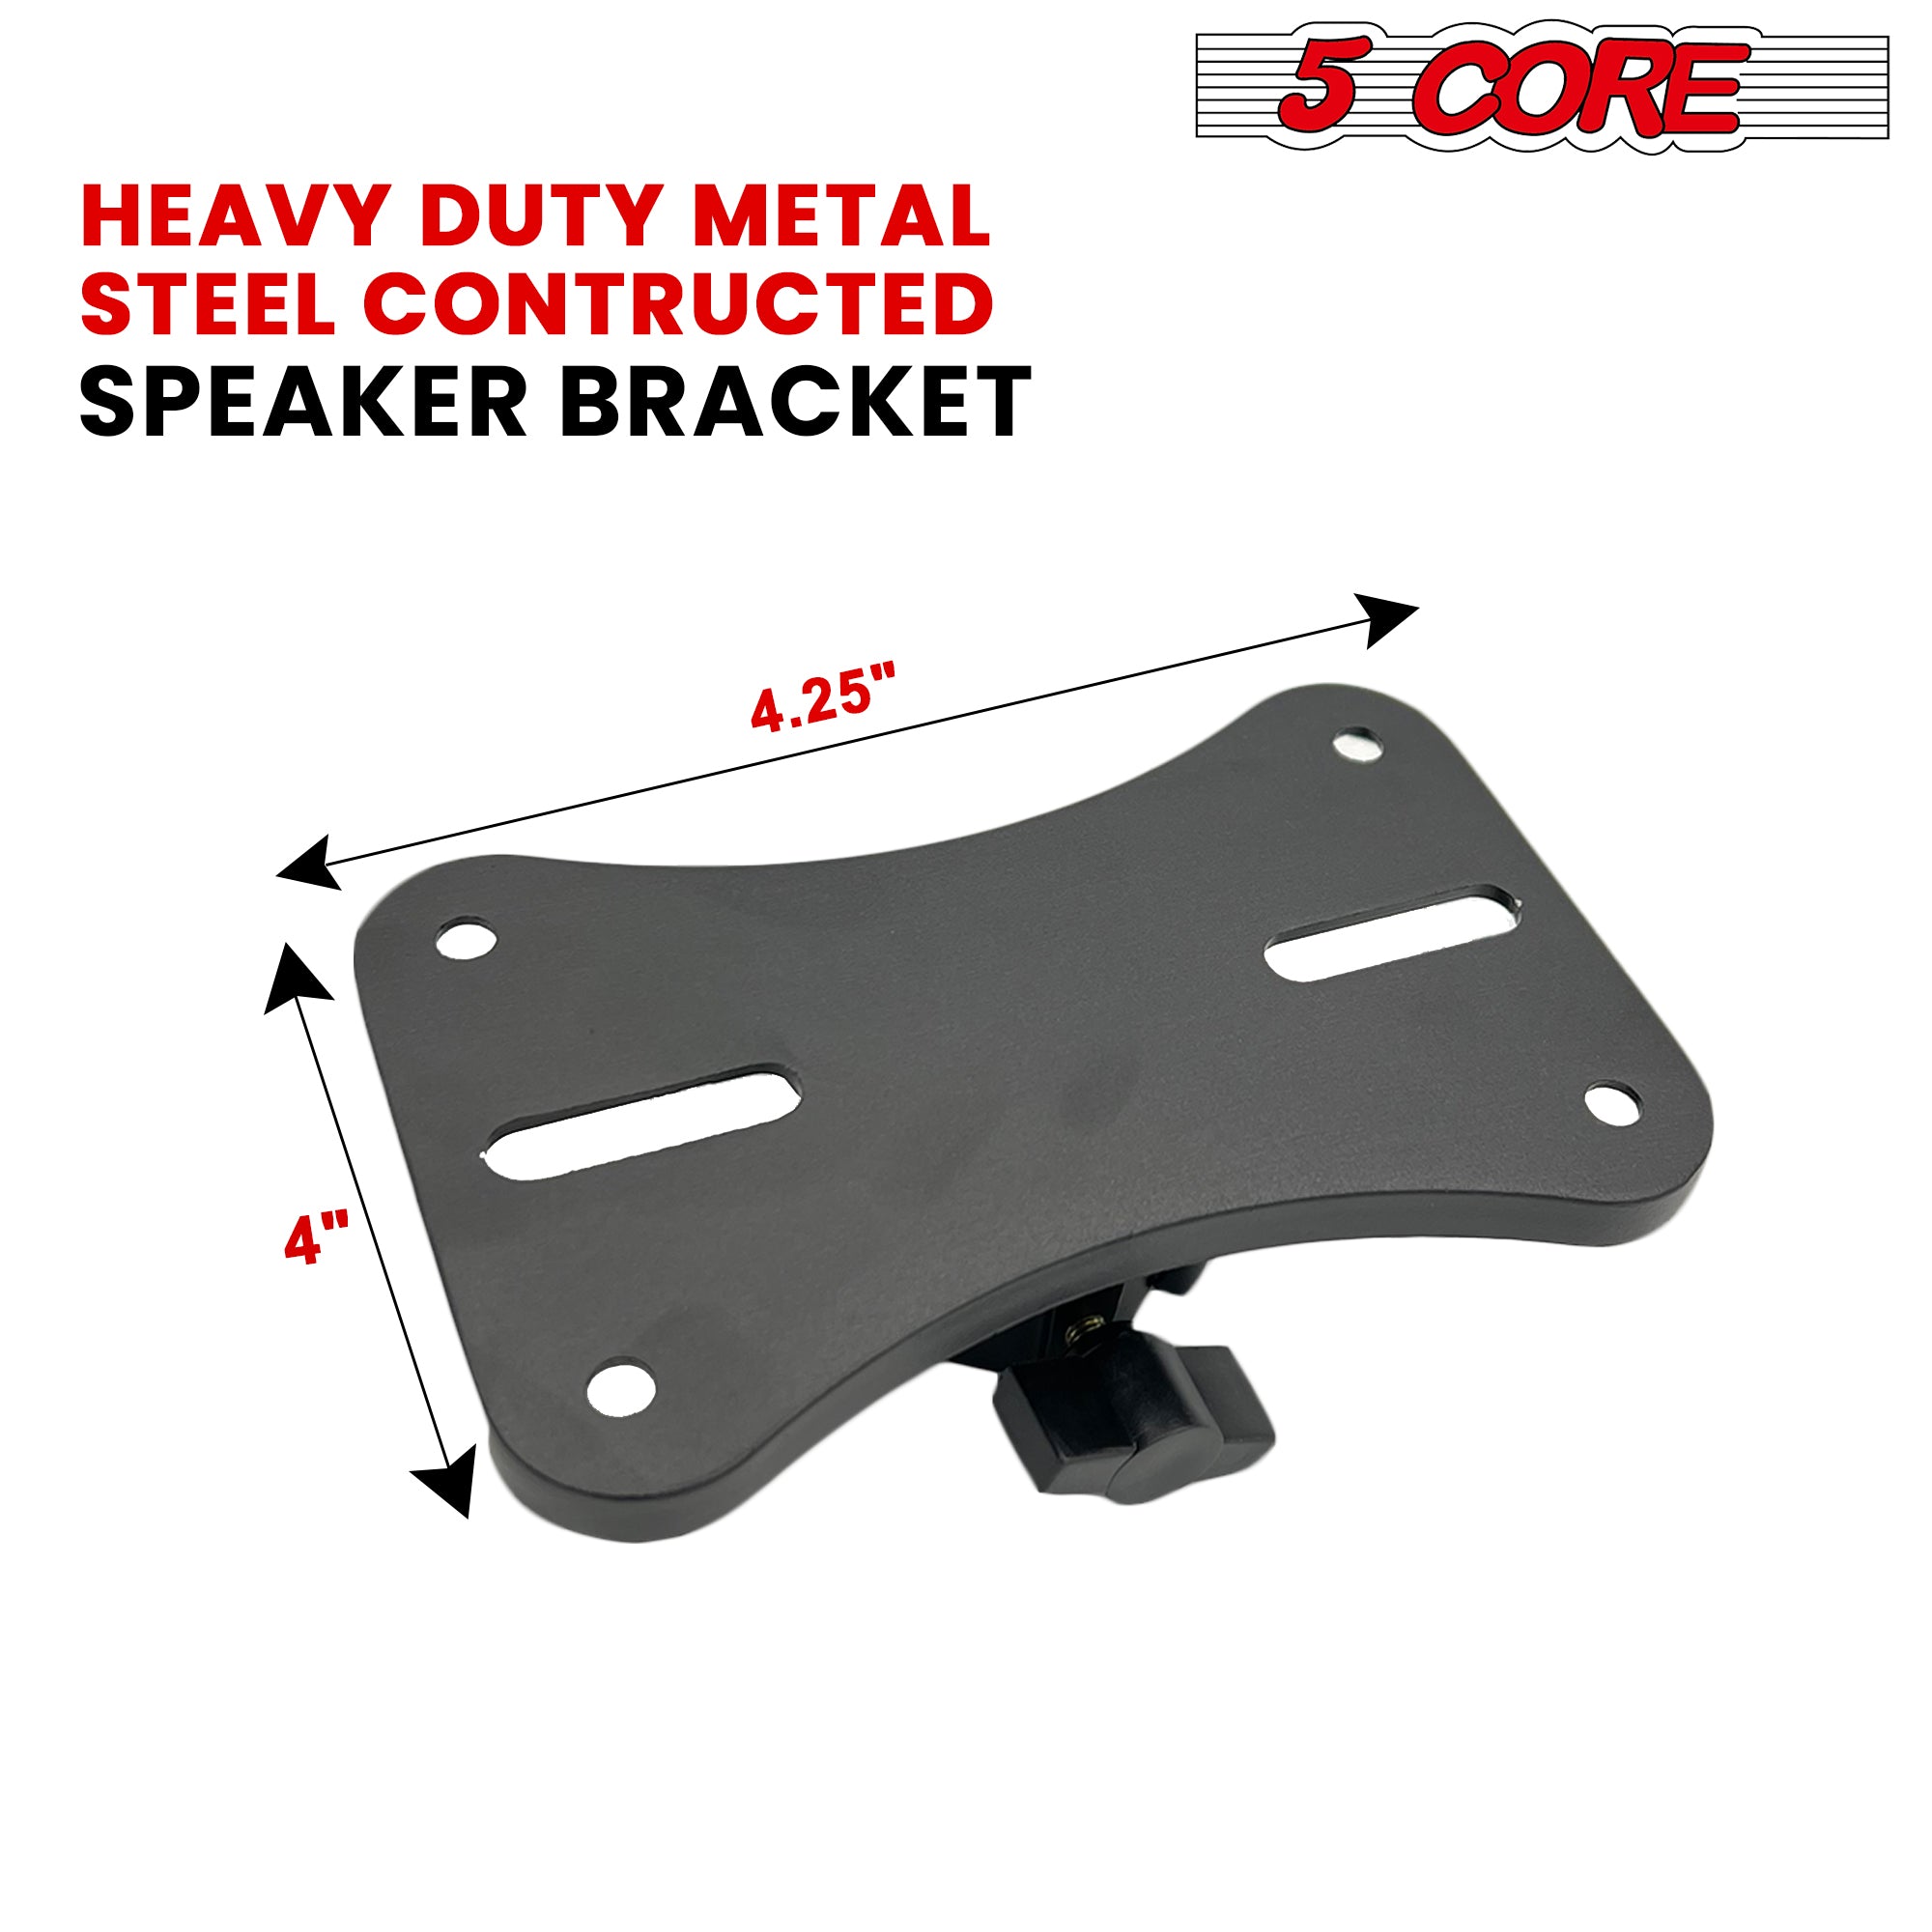 Speaker stand with heavy duty metal steel constructed speaker bracket.